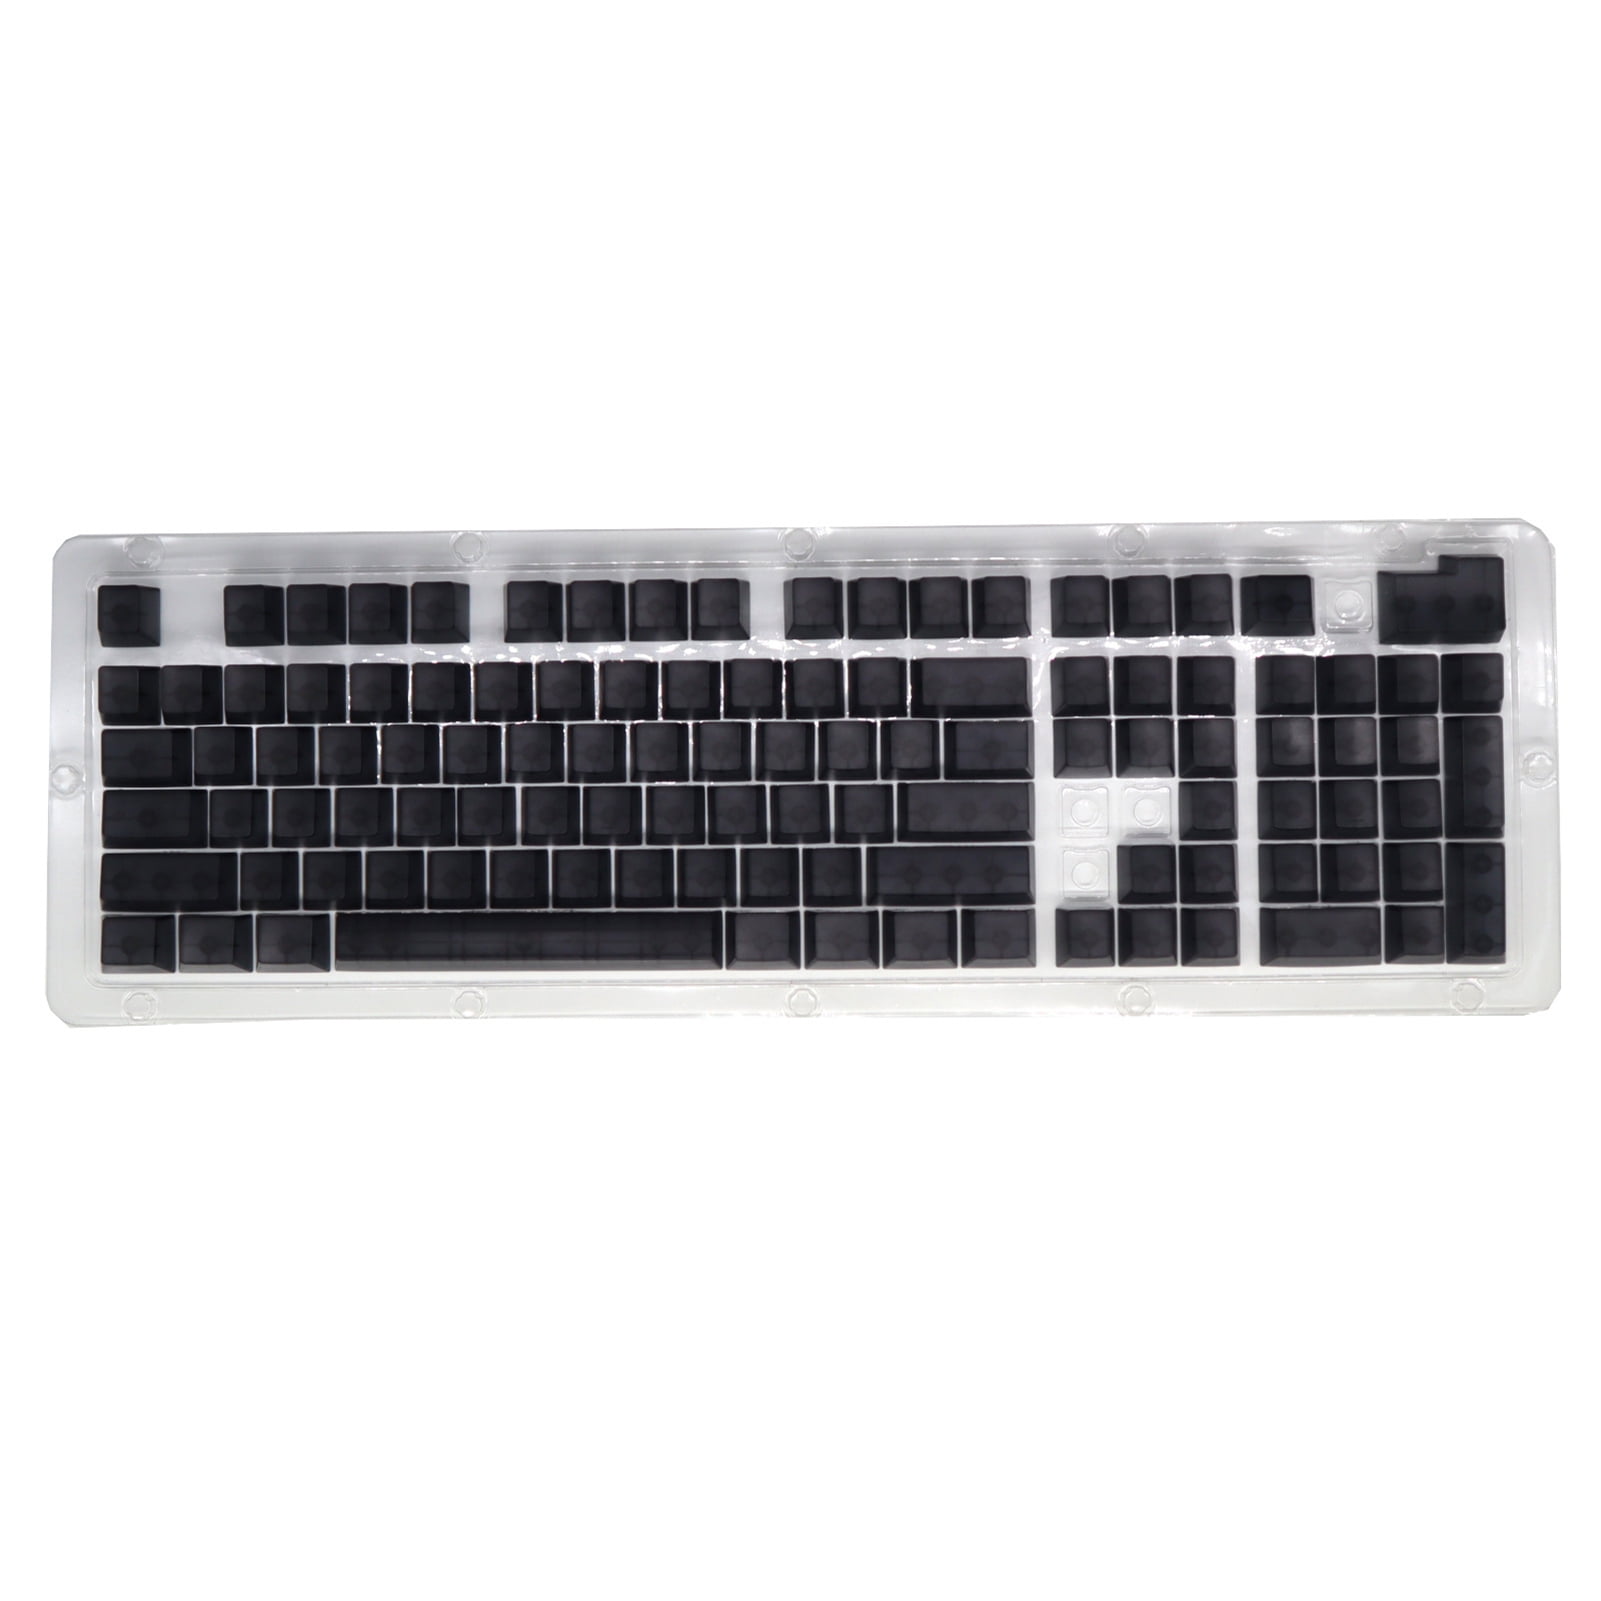 Walbest 104Pcs Universal PBT Translucent Keycaps for Mechanical Keyboard, 1  set Wear-Resistant Backlight PBT Key Caps, Key Caps Replacement Keyboard  Accessories 